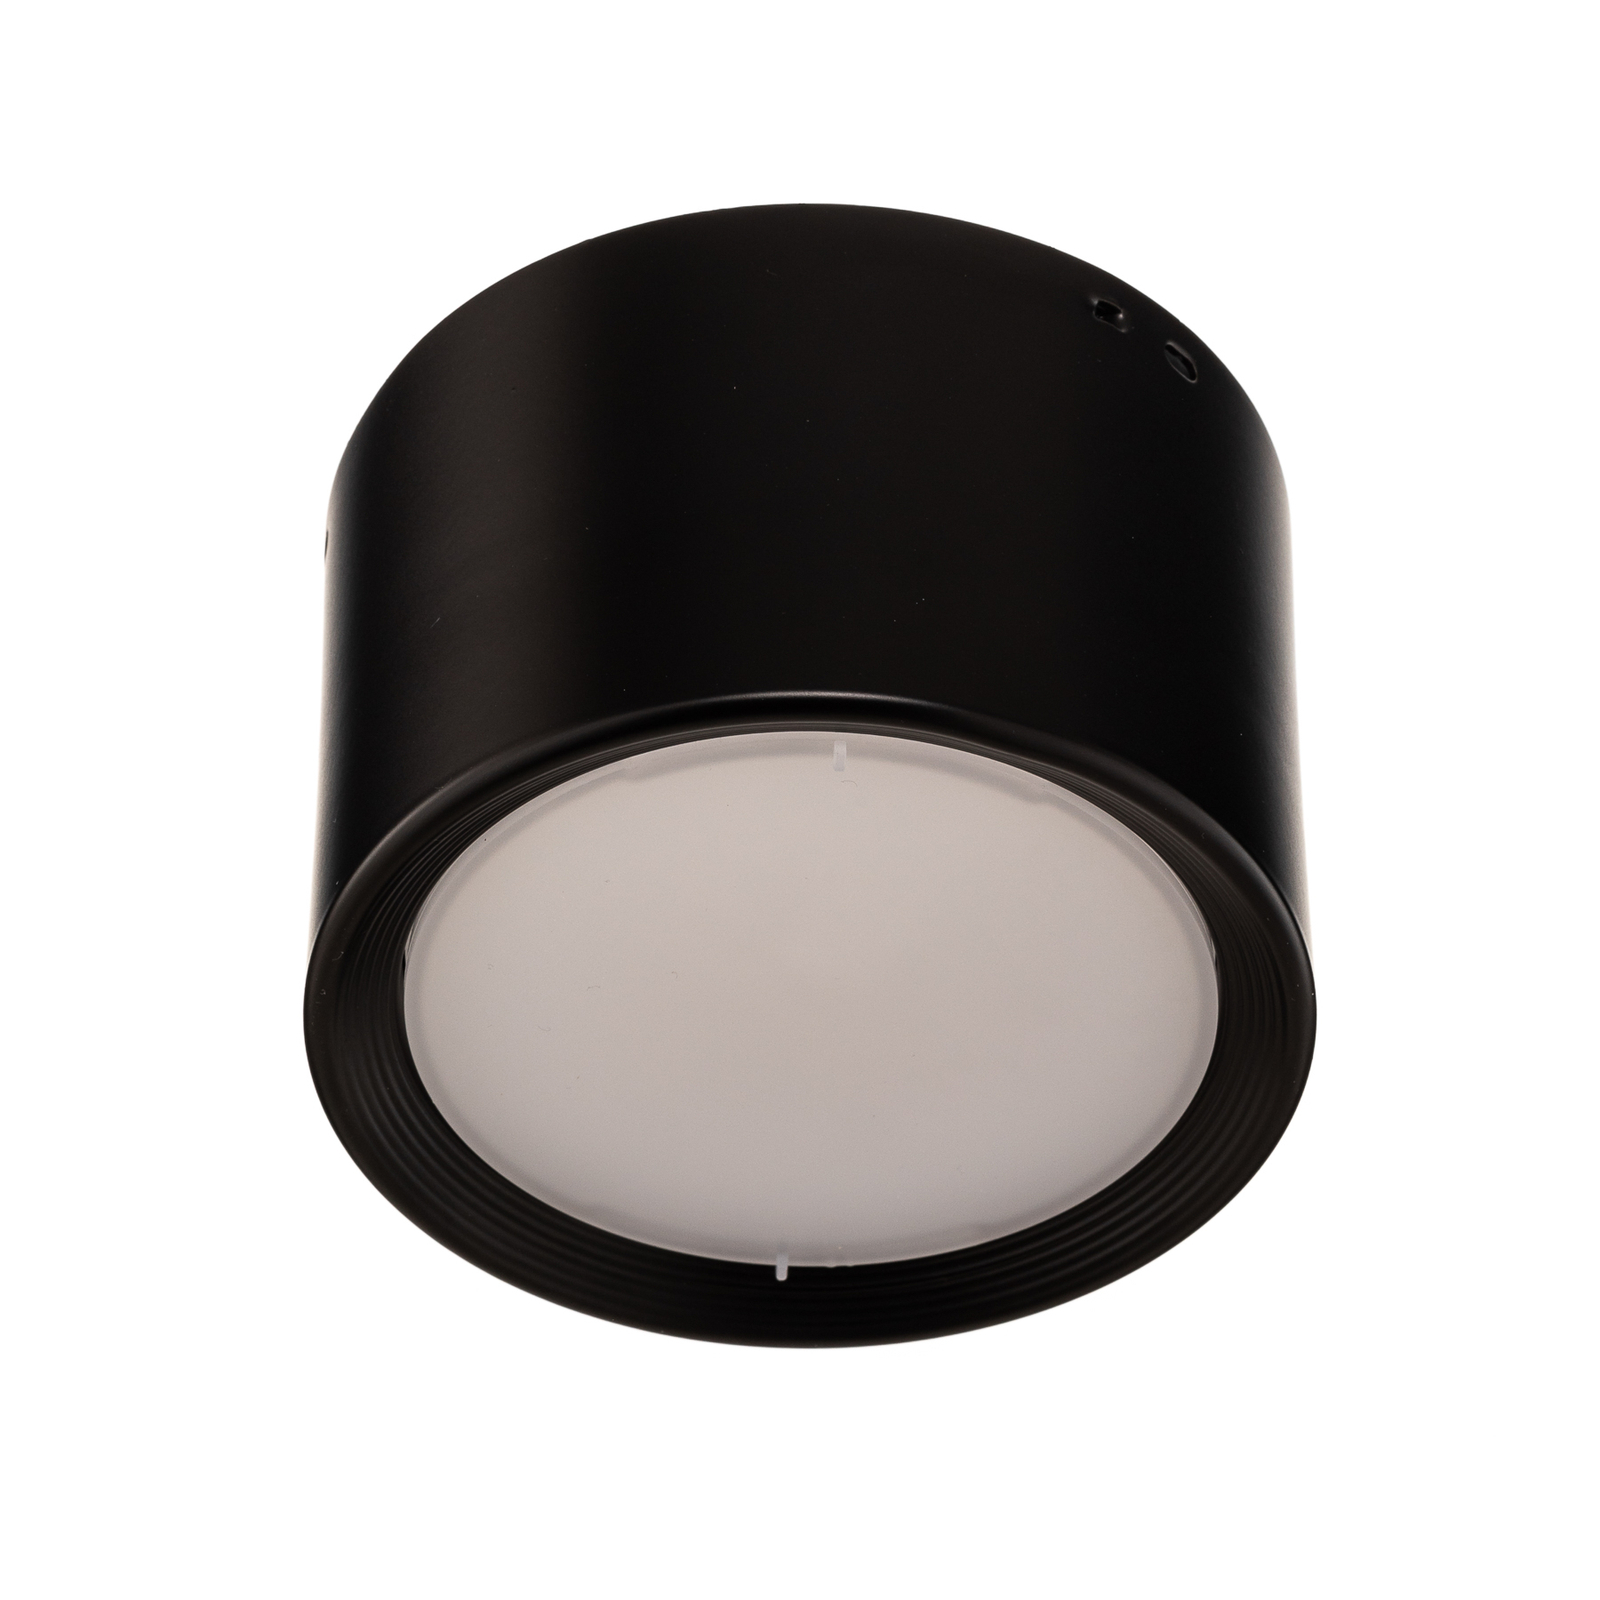 LED downlight Ita in black with diffuser, Ø 12 cm